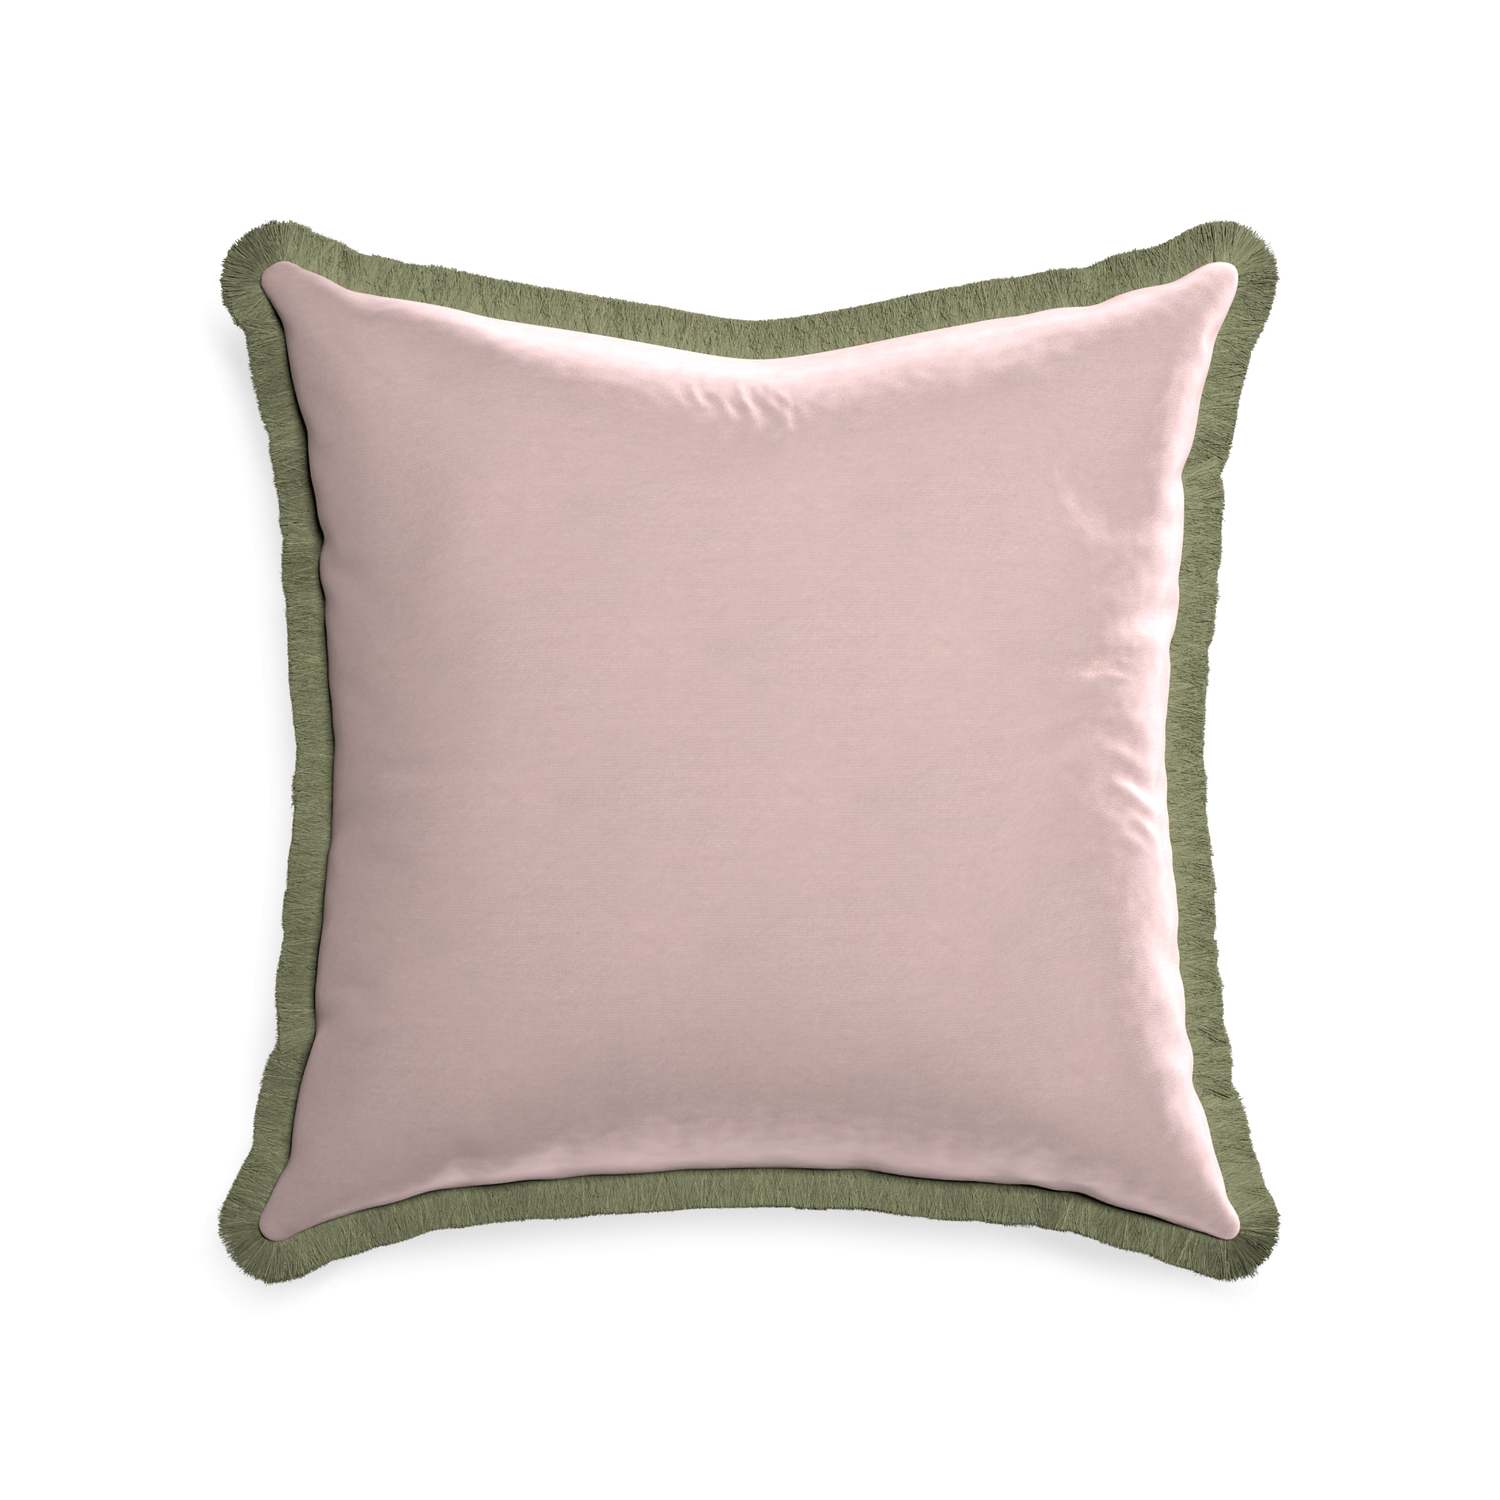 square light pink velvet pillow with sage green fringe